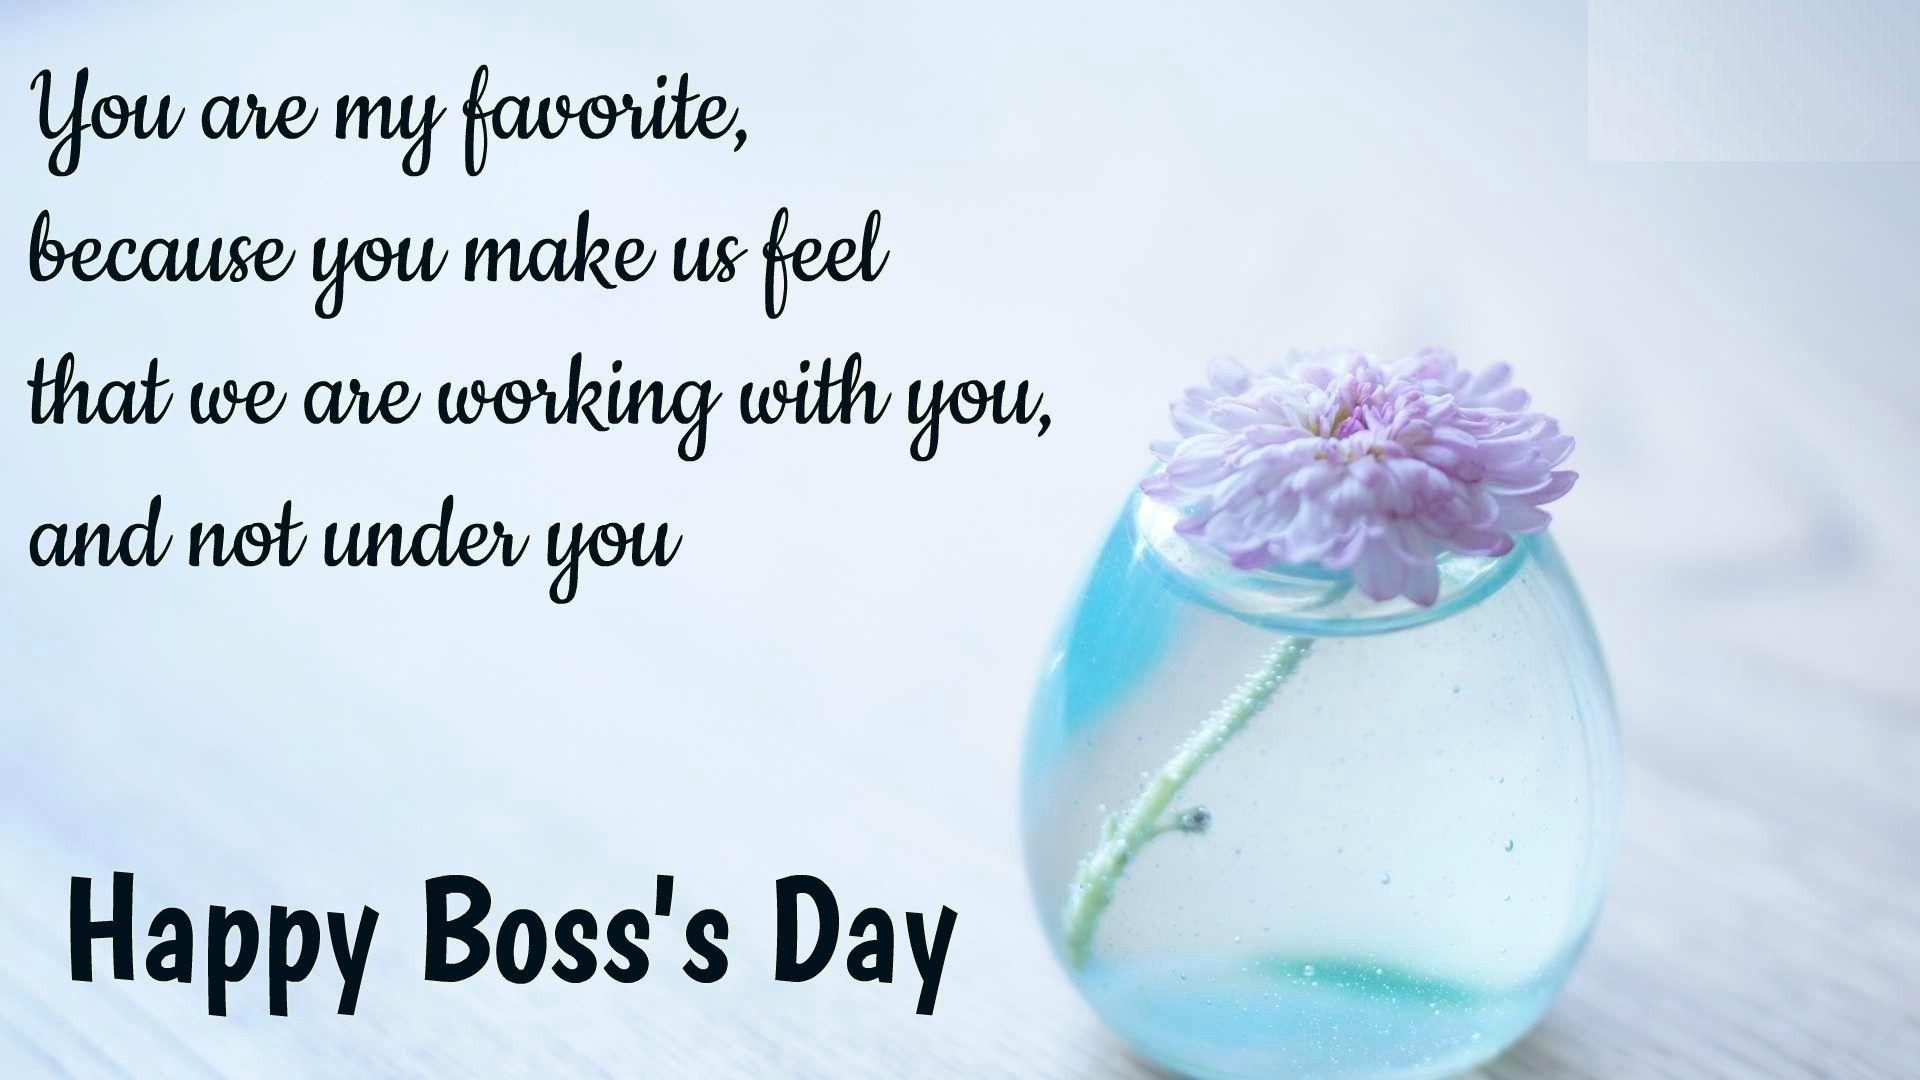 Boss Day Image Funny For Facebook. Printable Calendar